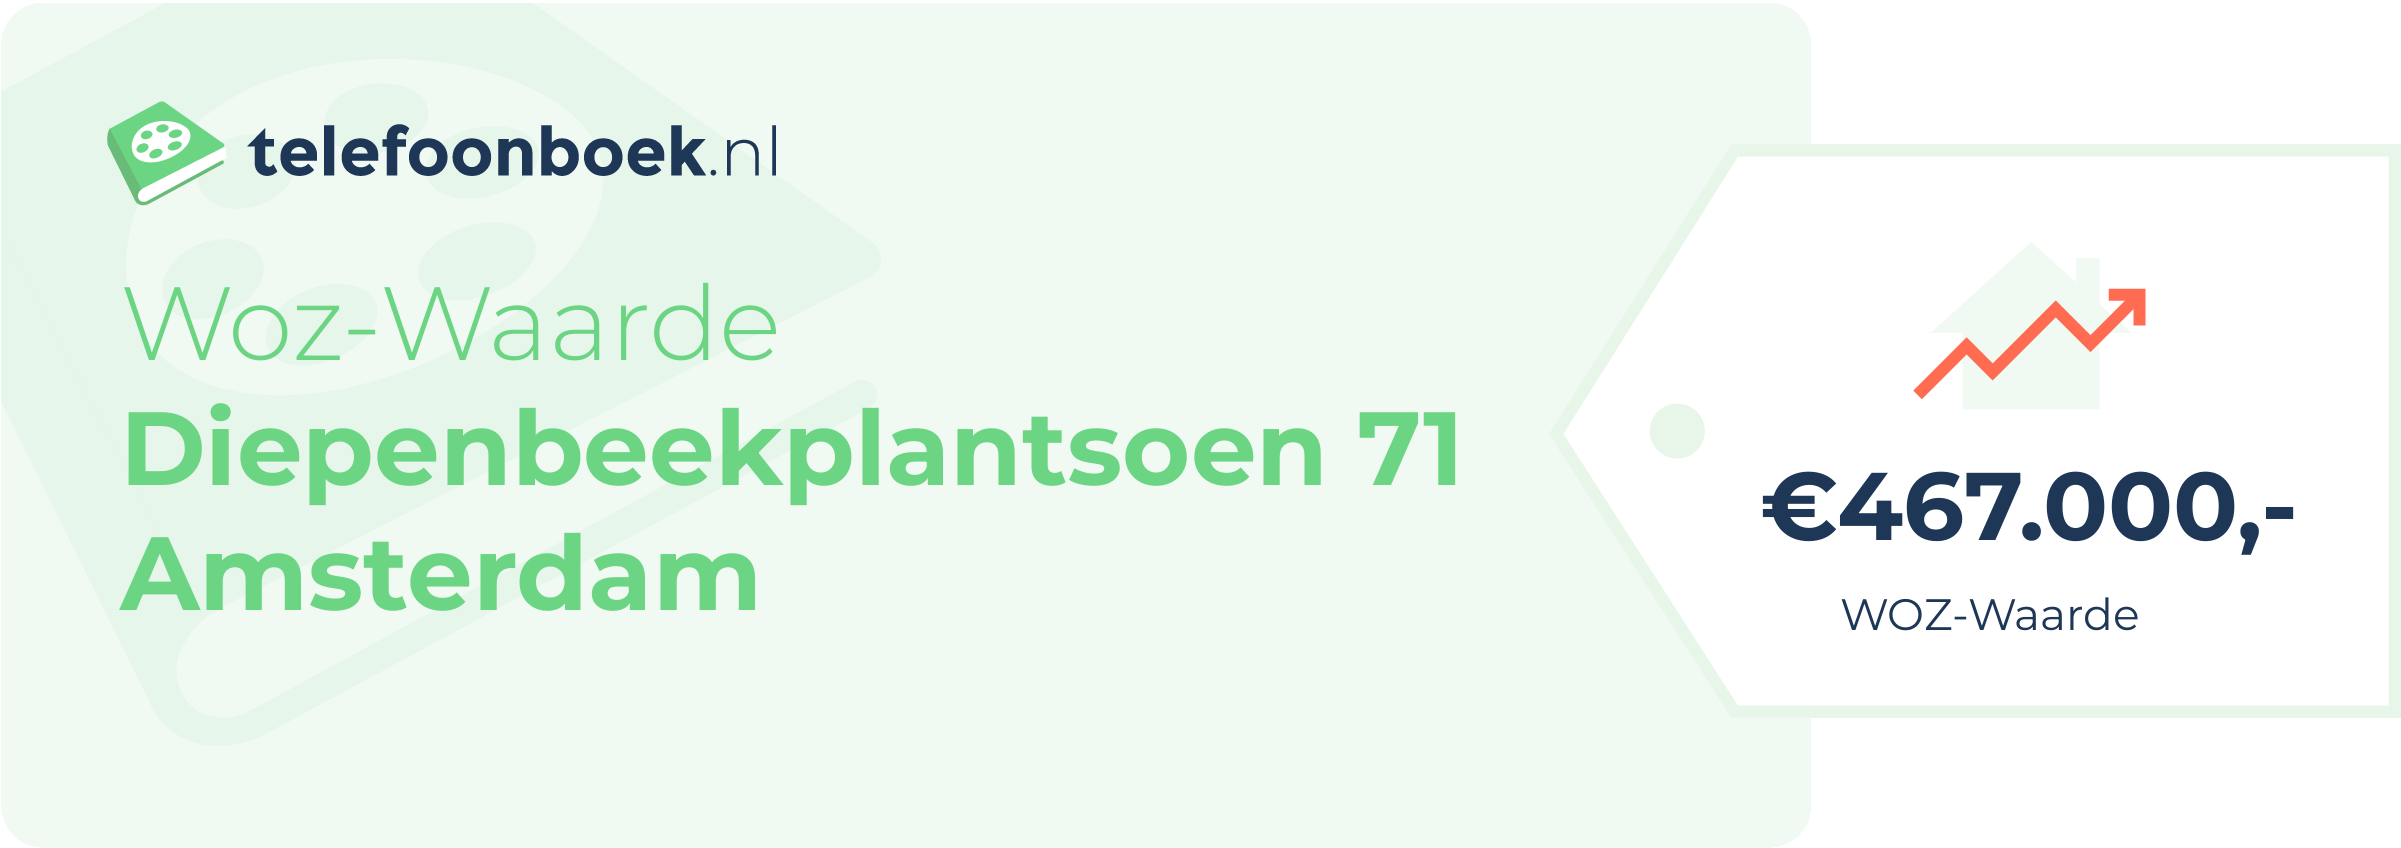 WOZ-waarde Diepenbeekplantsoen 71 Amsterdam